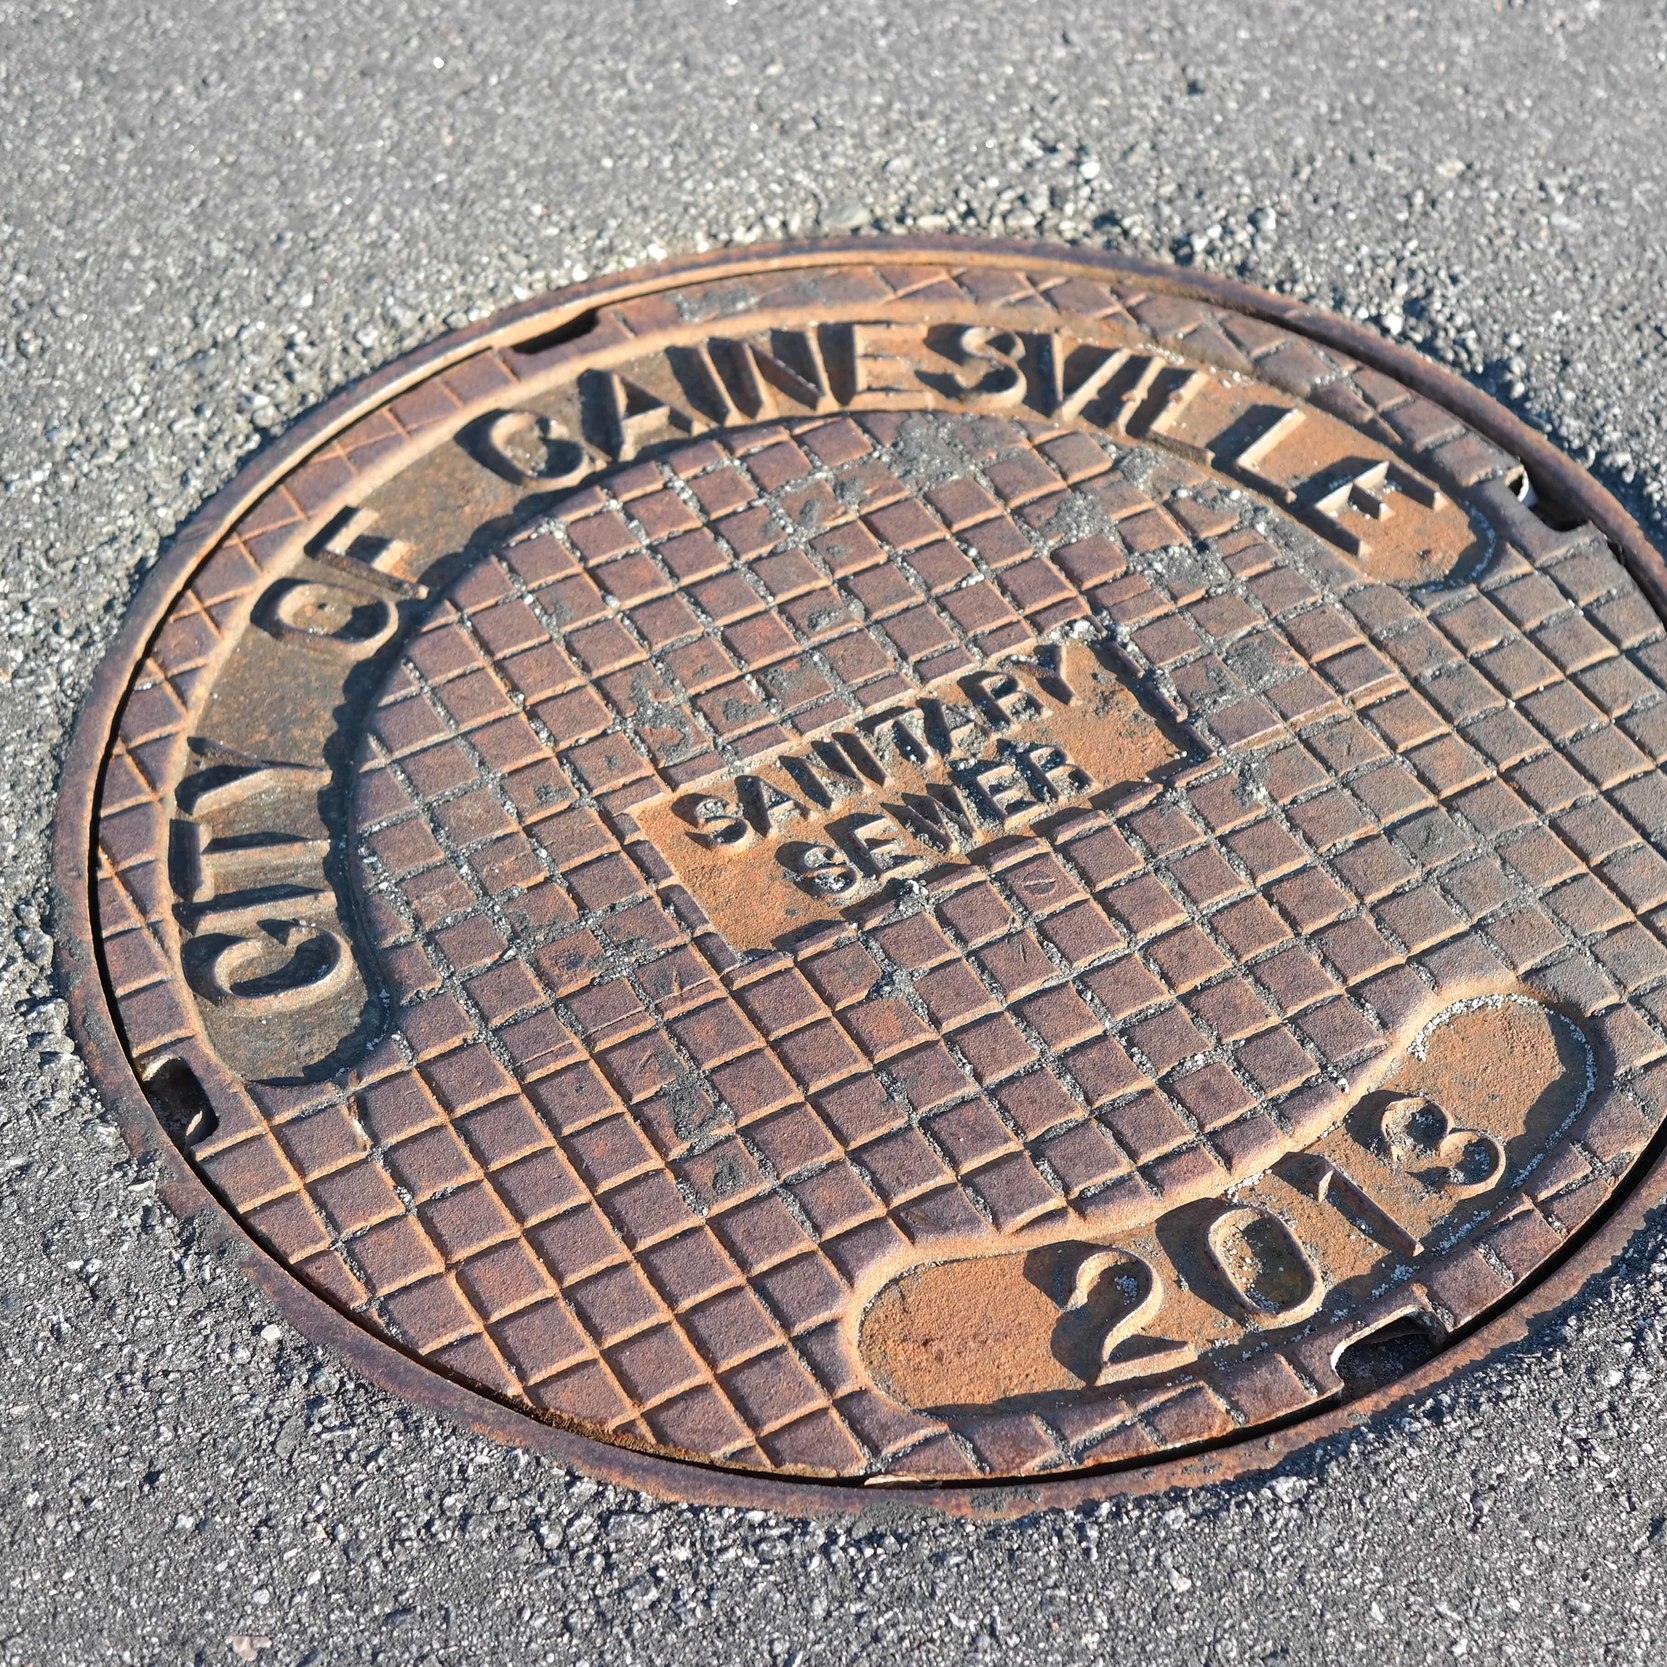 Utilities Sewer Manhole